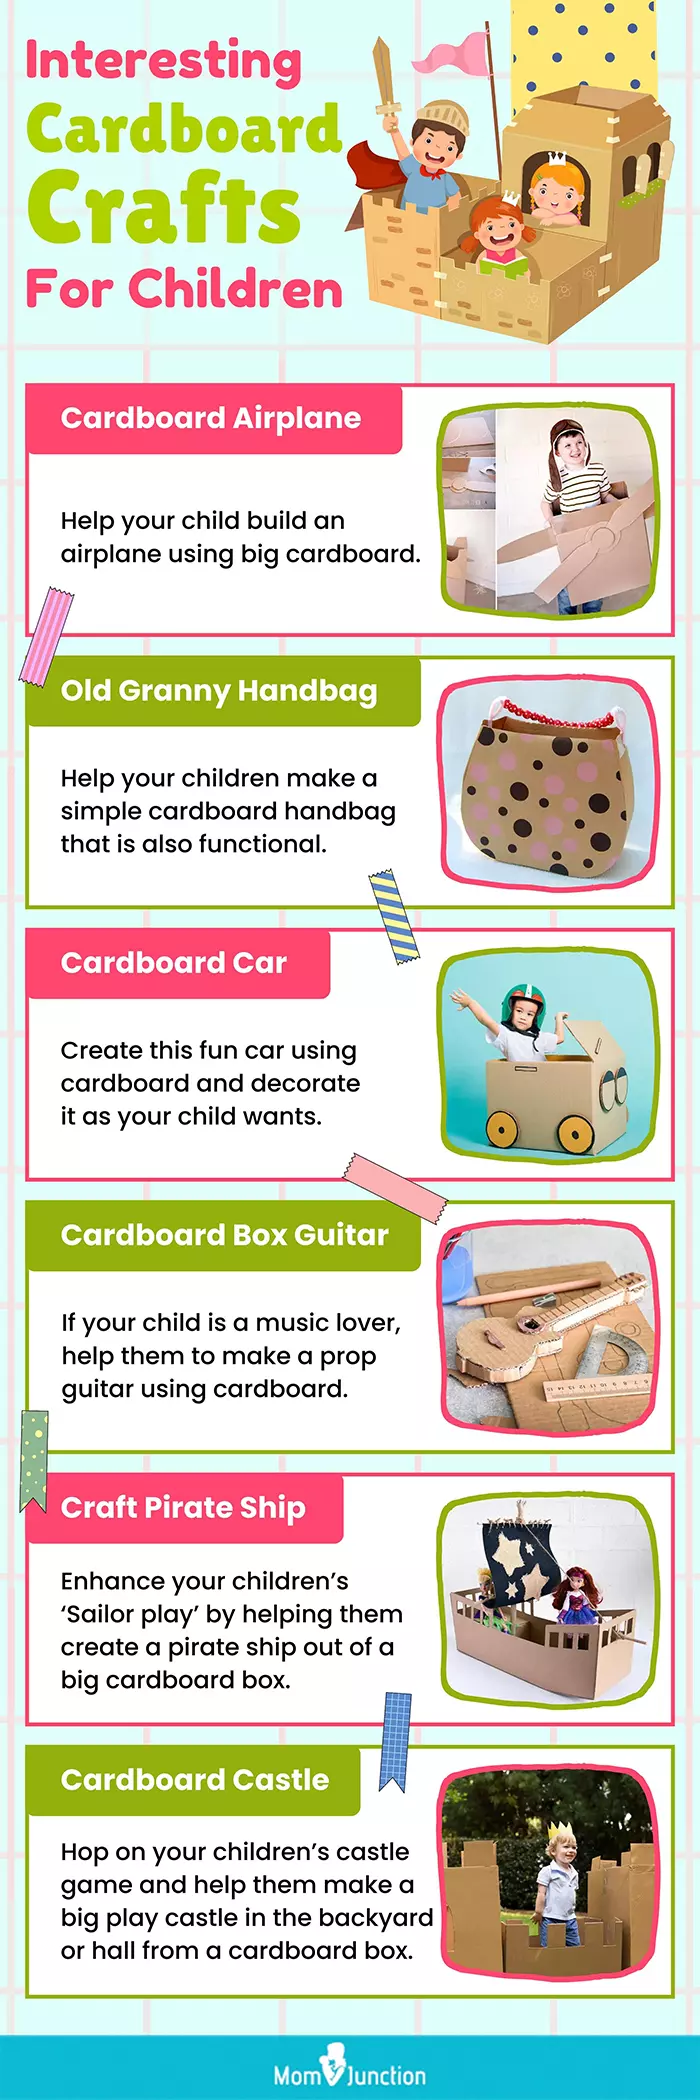 interesting cardboard crafts for children (infographic)